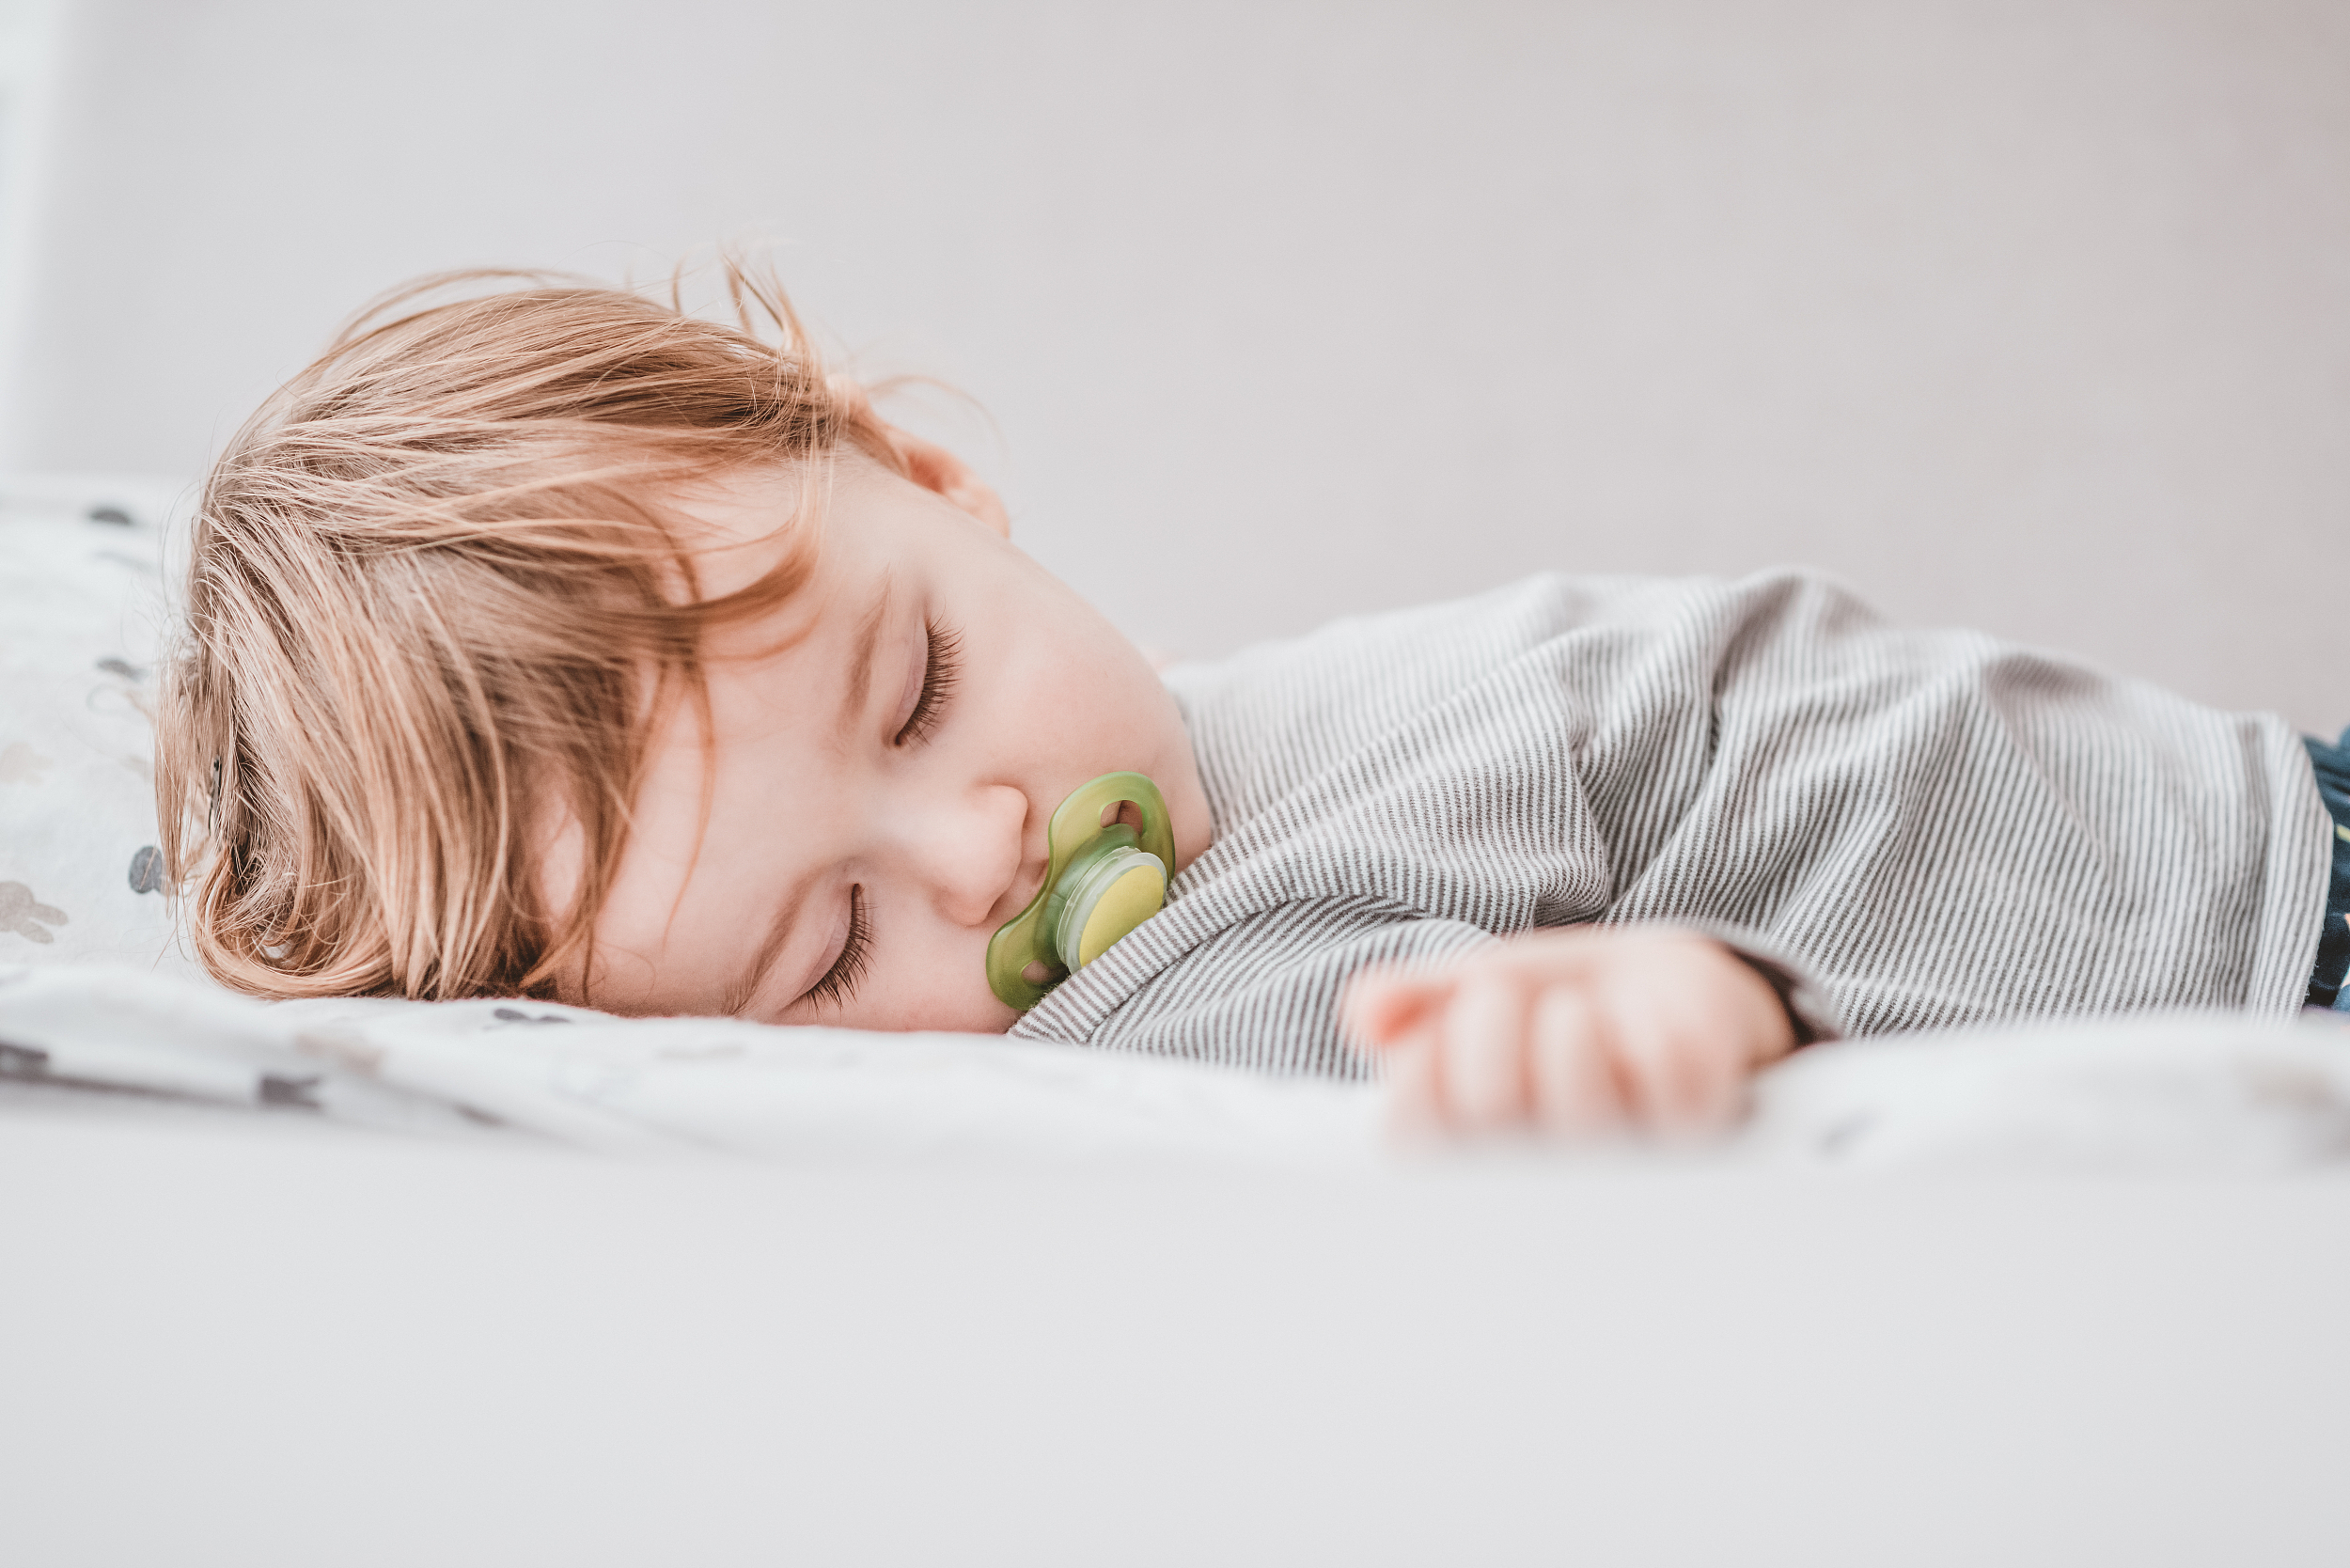 aap指南更新:婴儿怎样睡觉才安全?